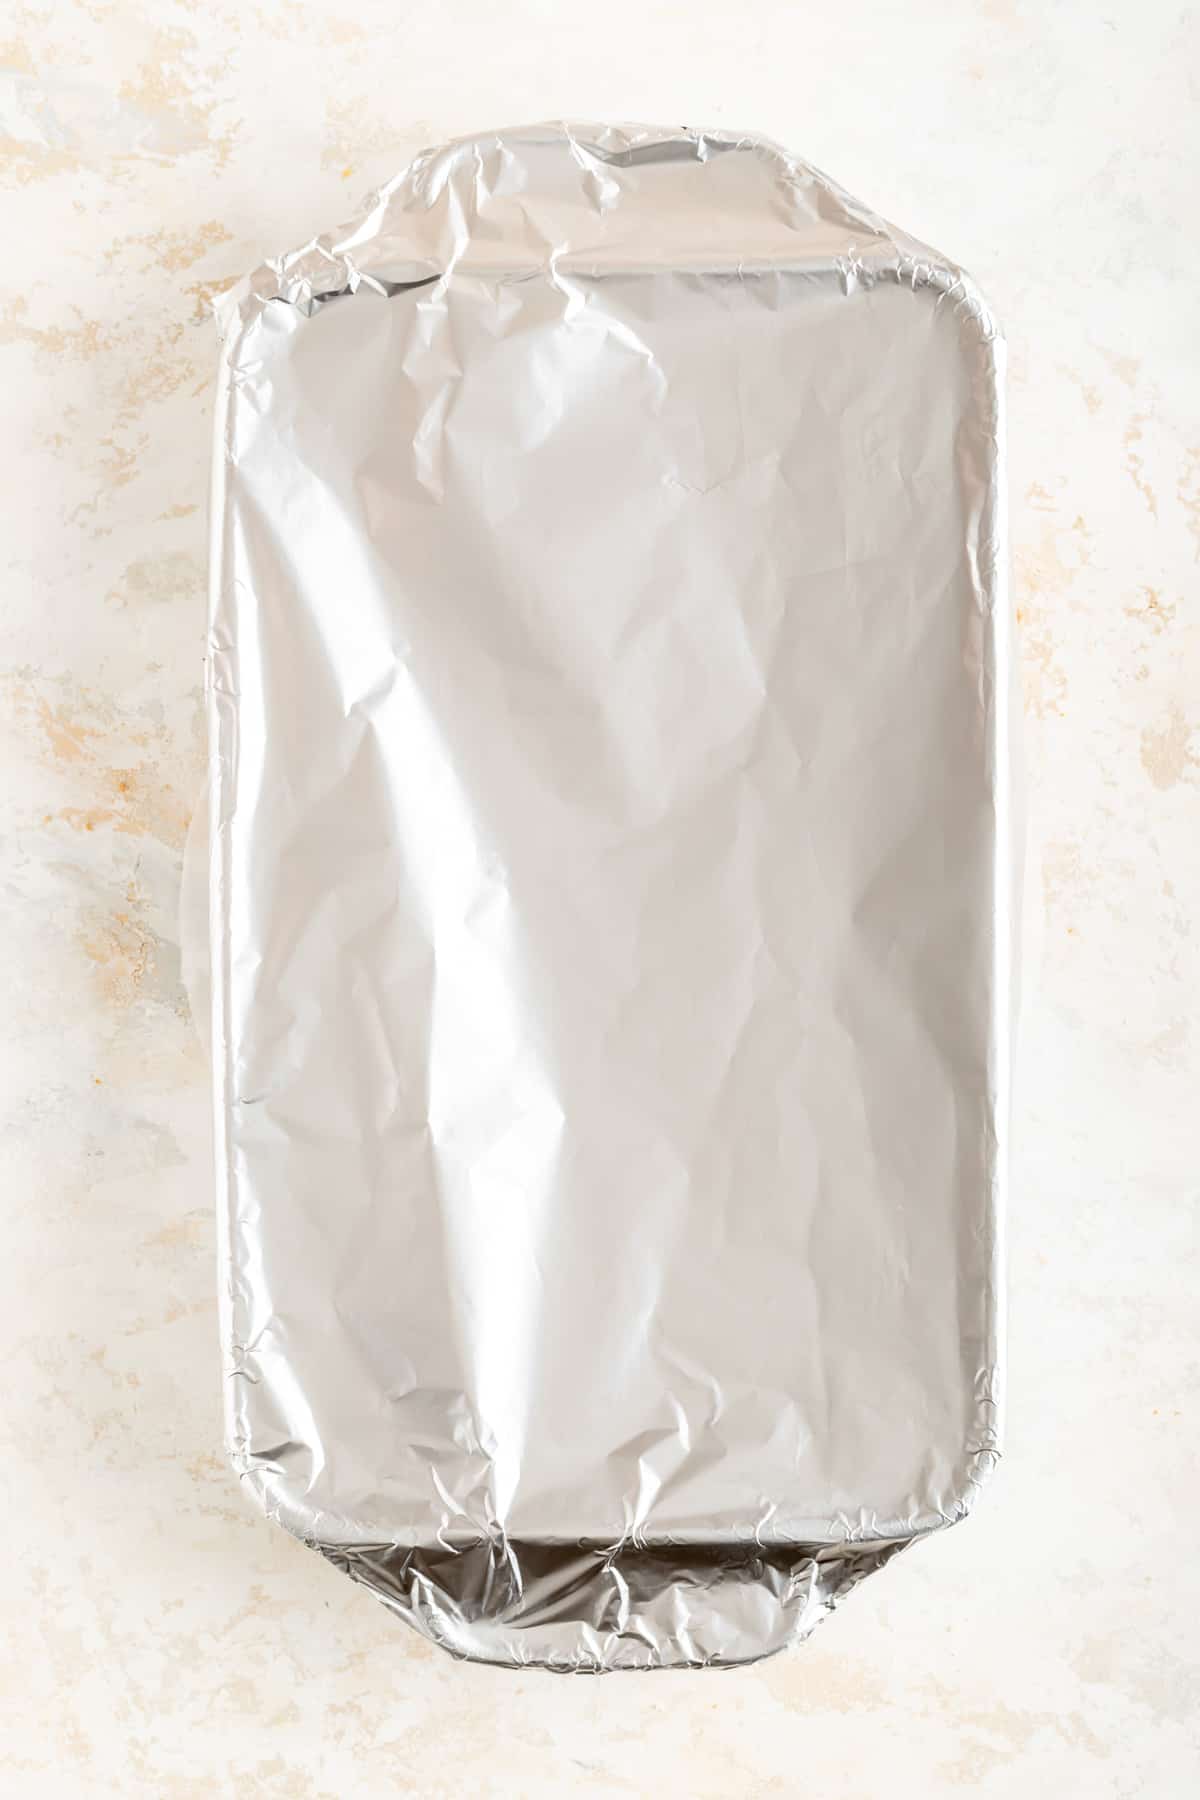 foil covered rectangular pan on a white plaster background.